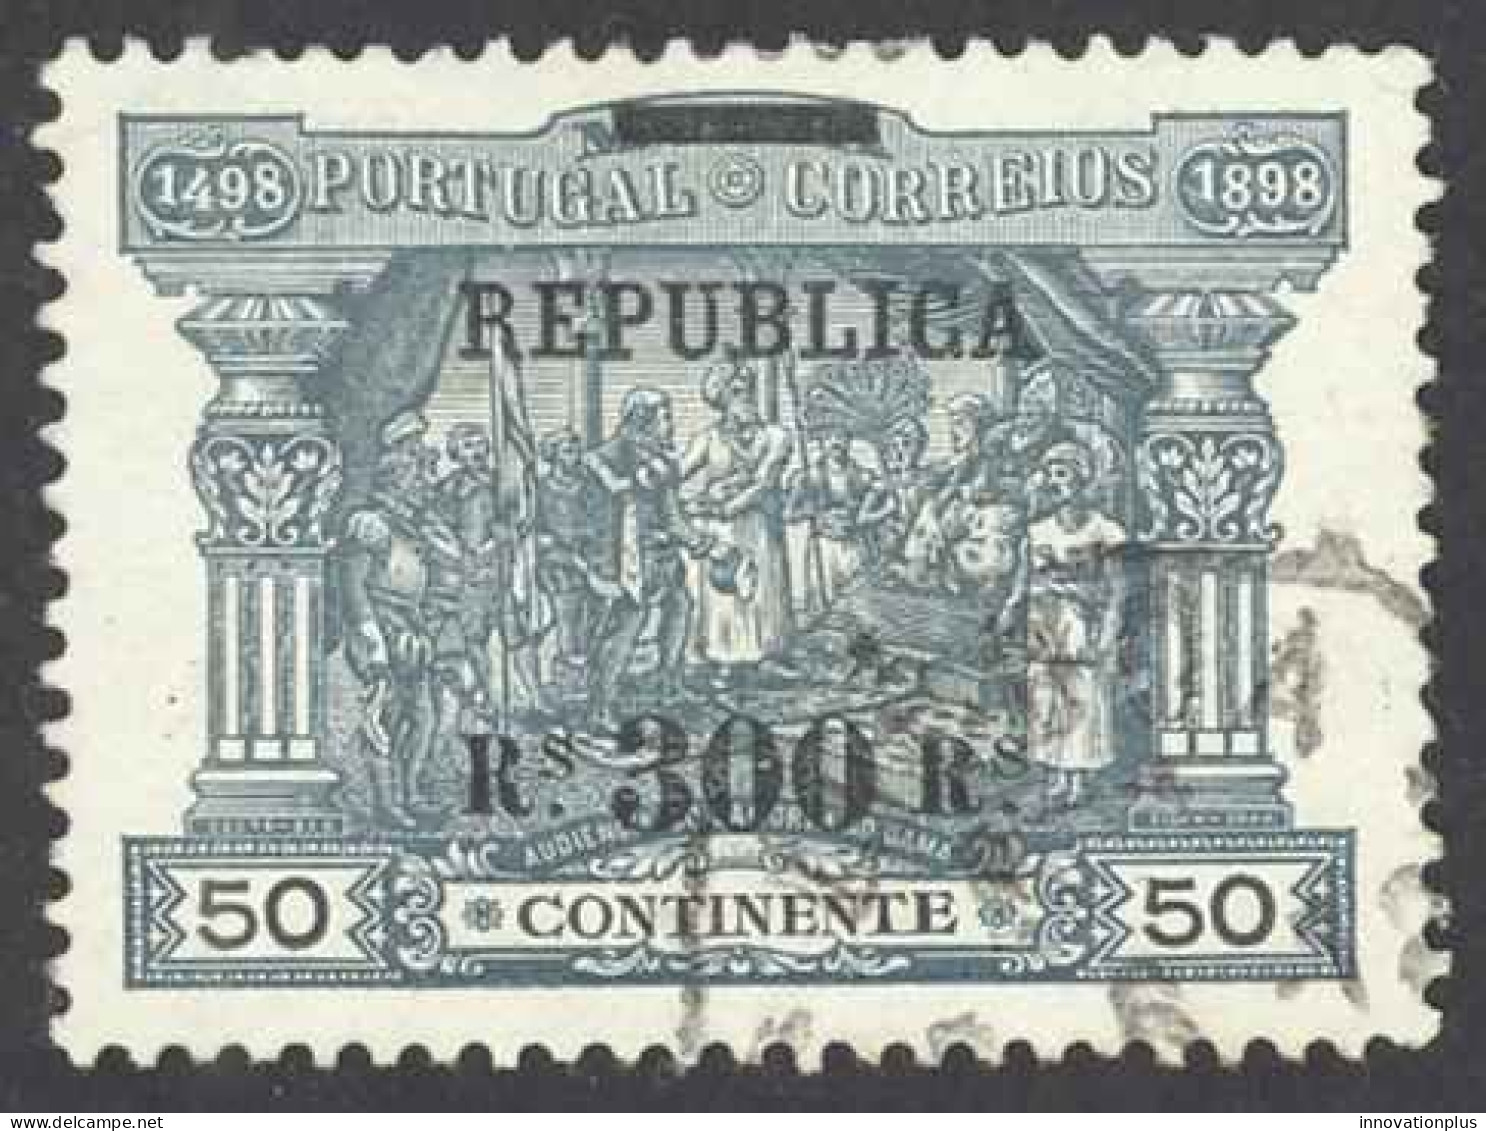 Portugal Sc# 197 Used (b) 1911 300r On 50r Overprint Postage Due - Usati